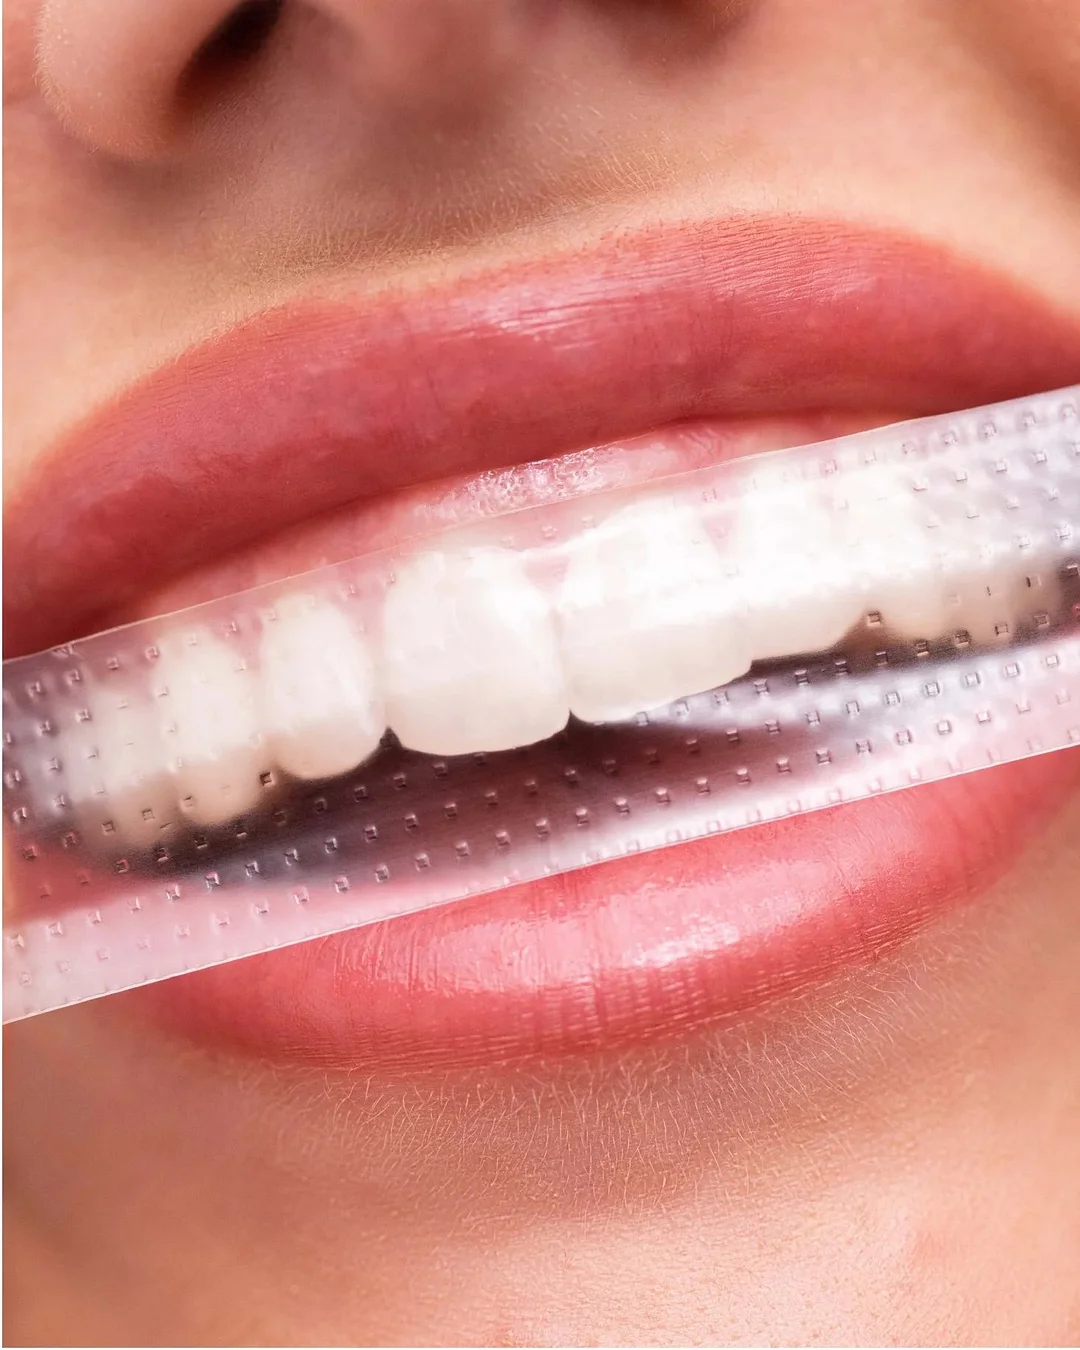 New PAP+ Whitening Strip Teeth Whitening